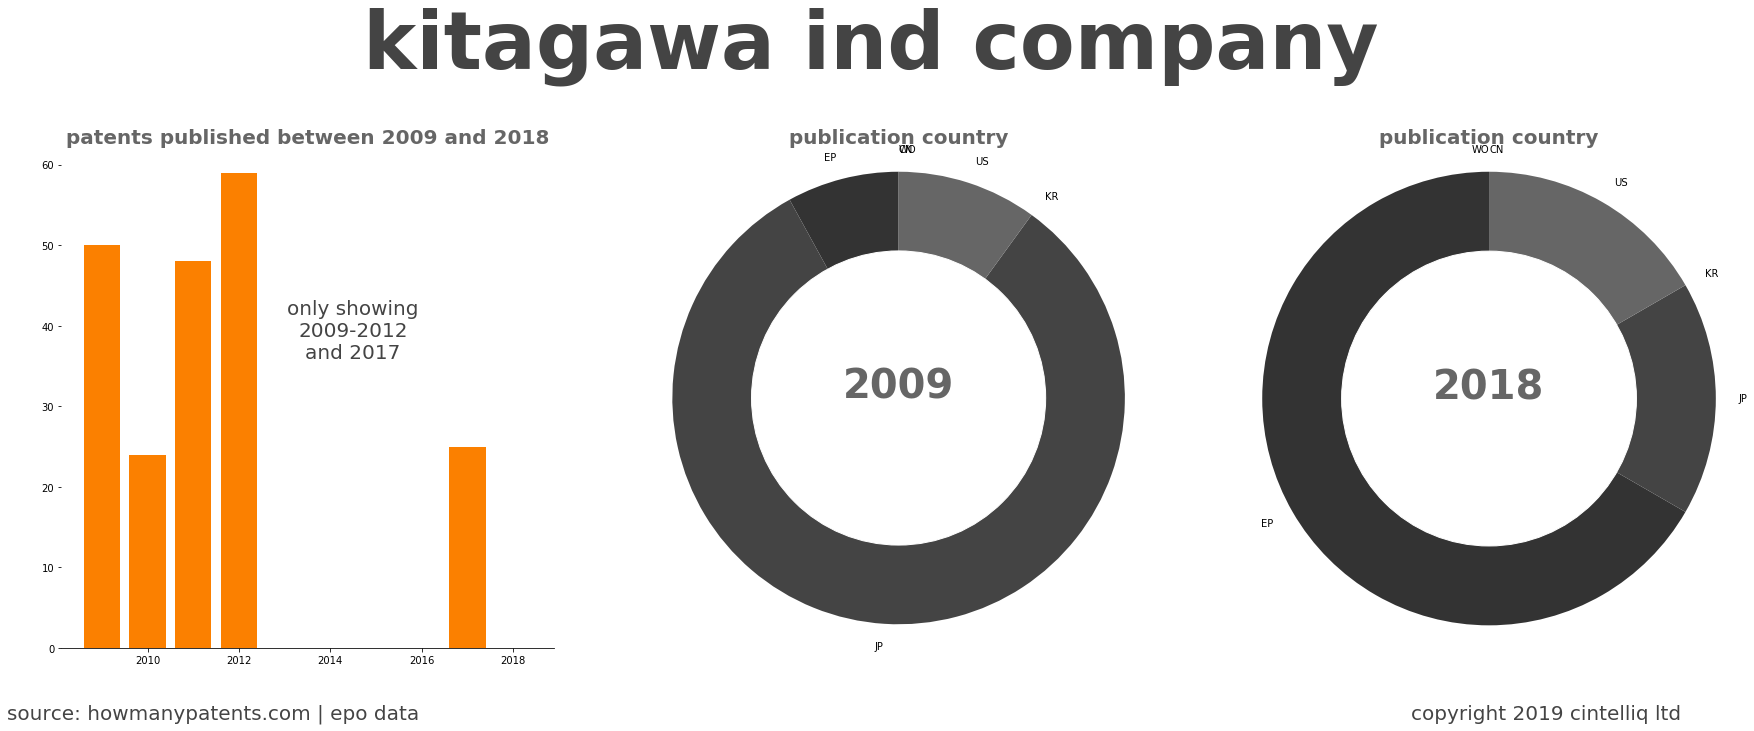 summary of patents for Kitagawa Ind Company